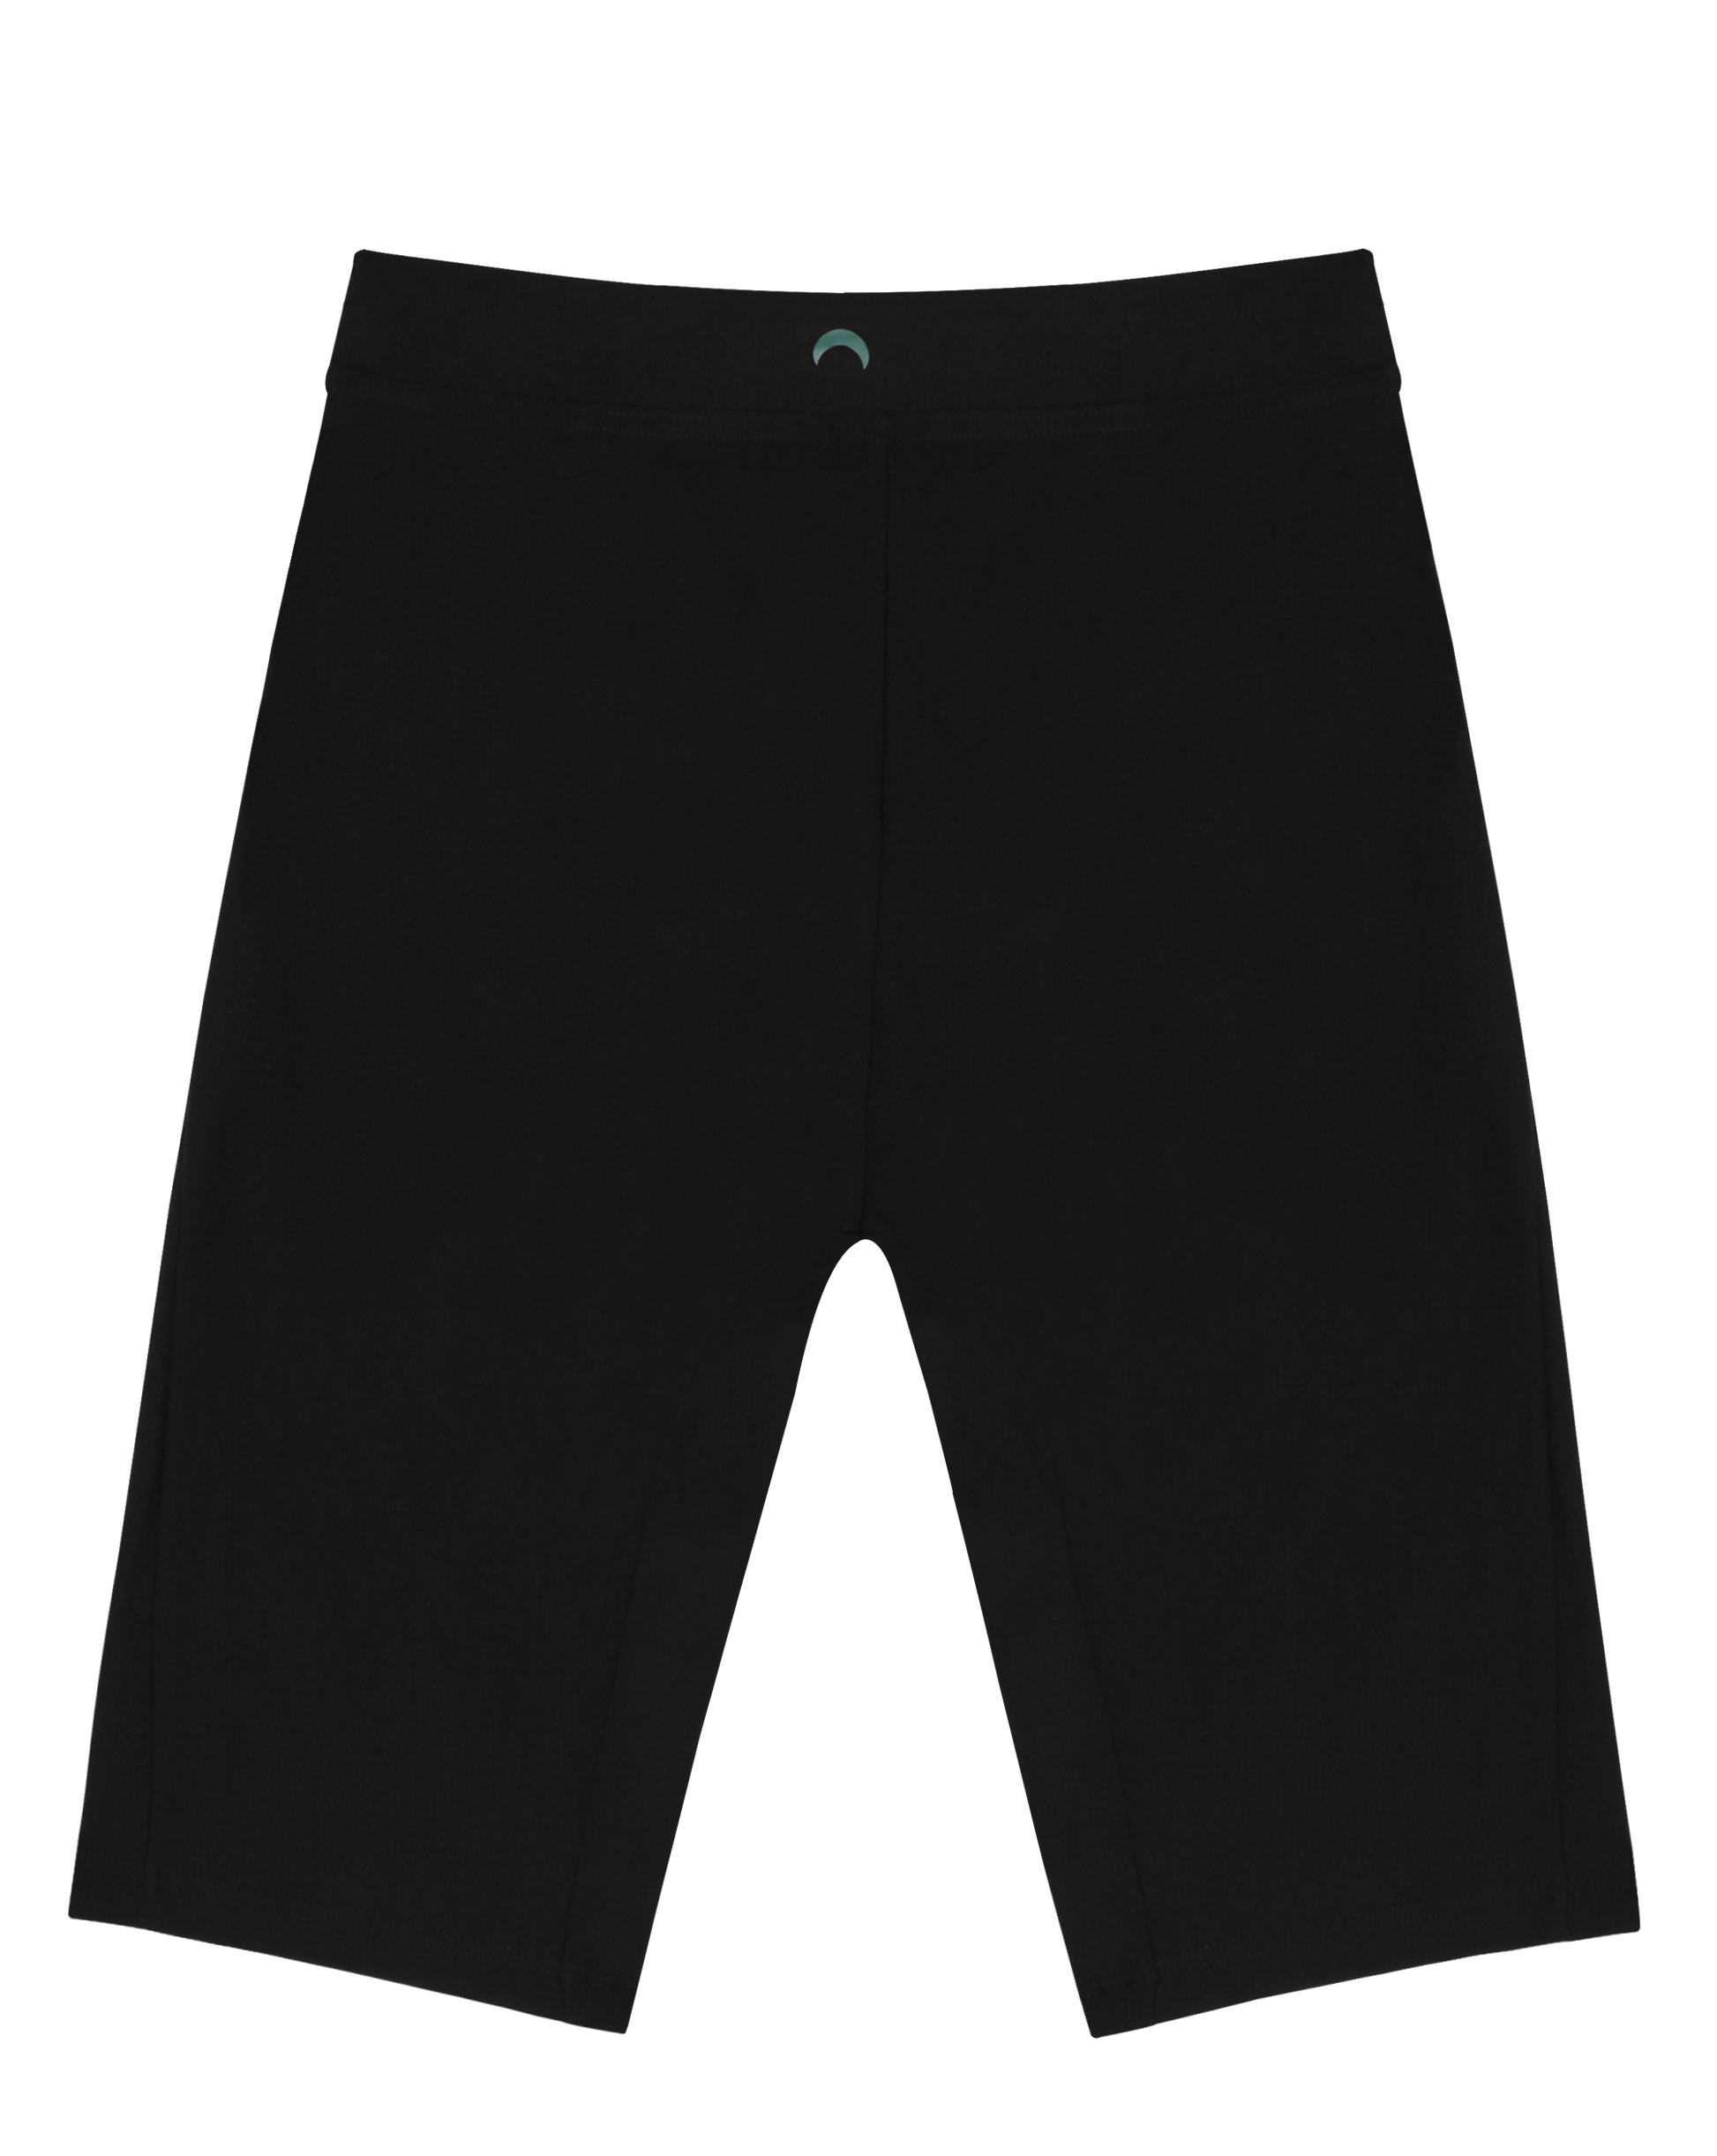 Seamless Comfort Bike Shorts Pack of 2 Nude / Black - Bras